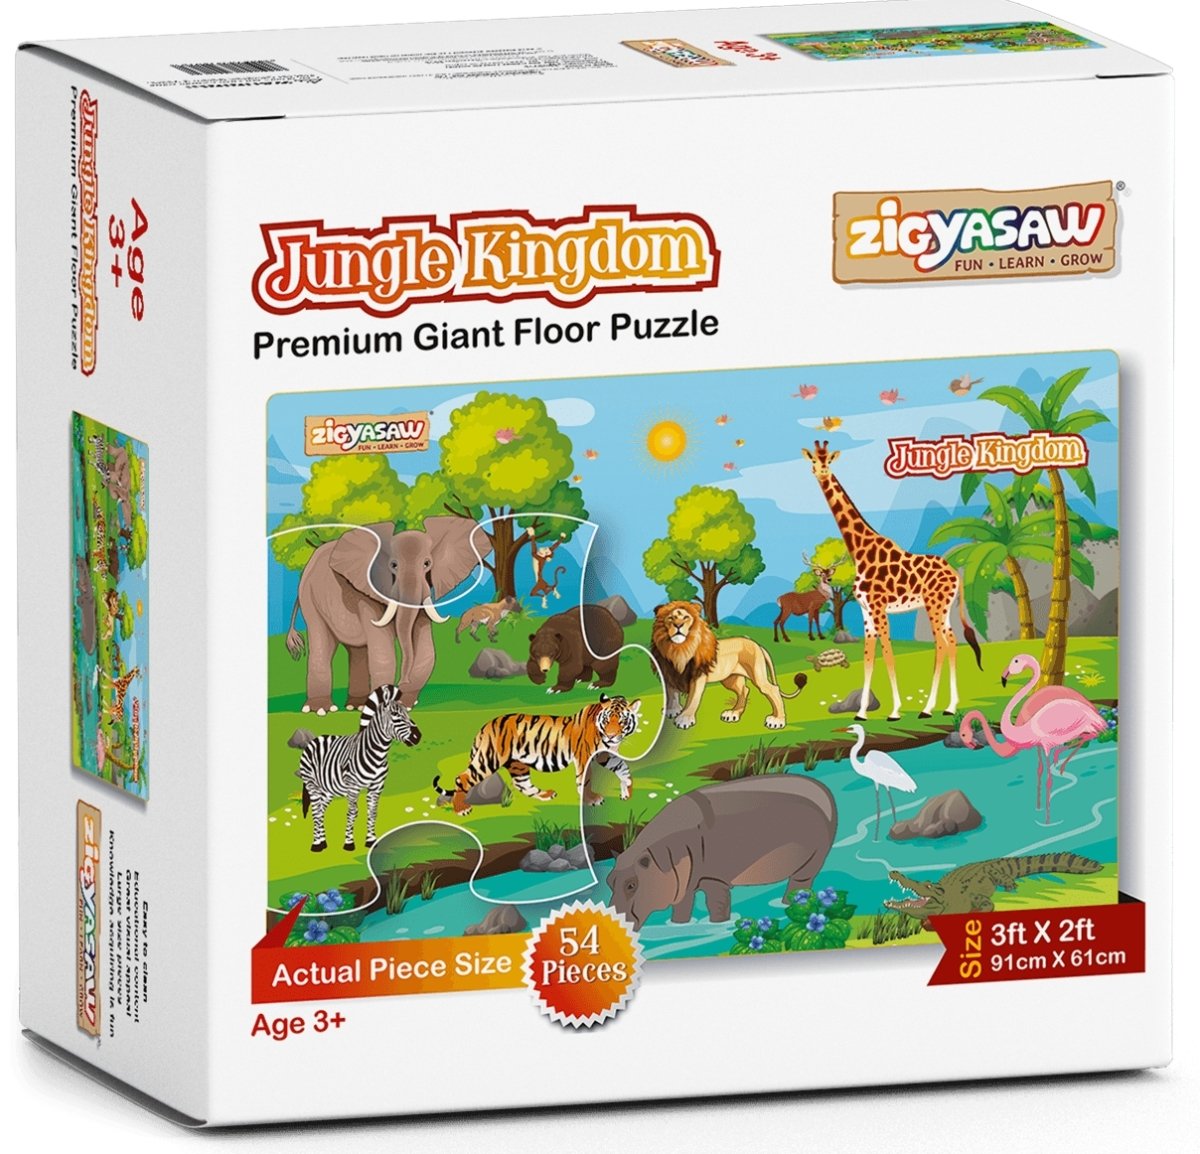 Zigyasaw Jungle kingdom premium giant floor puzzle game freeshipping - Zigyasaw